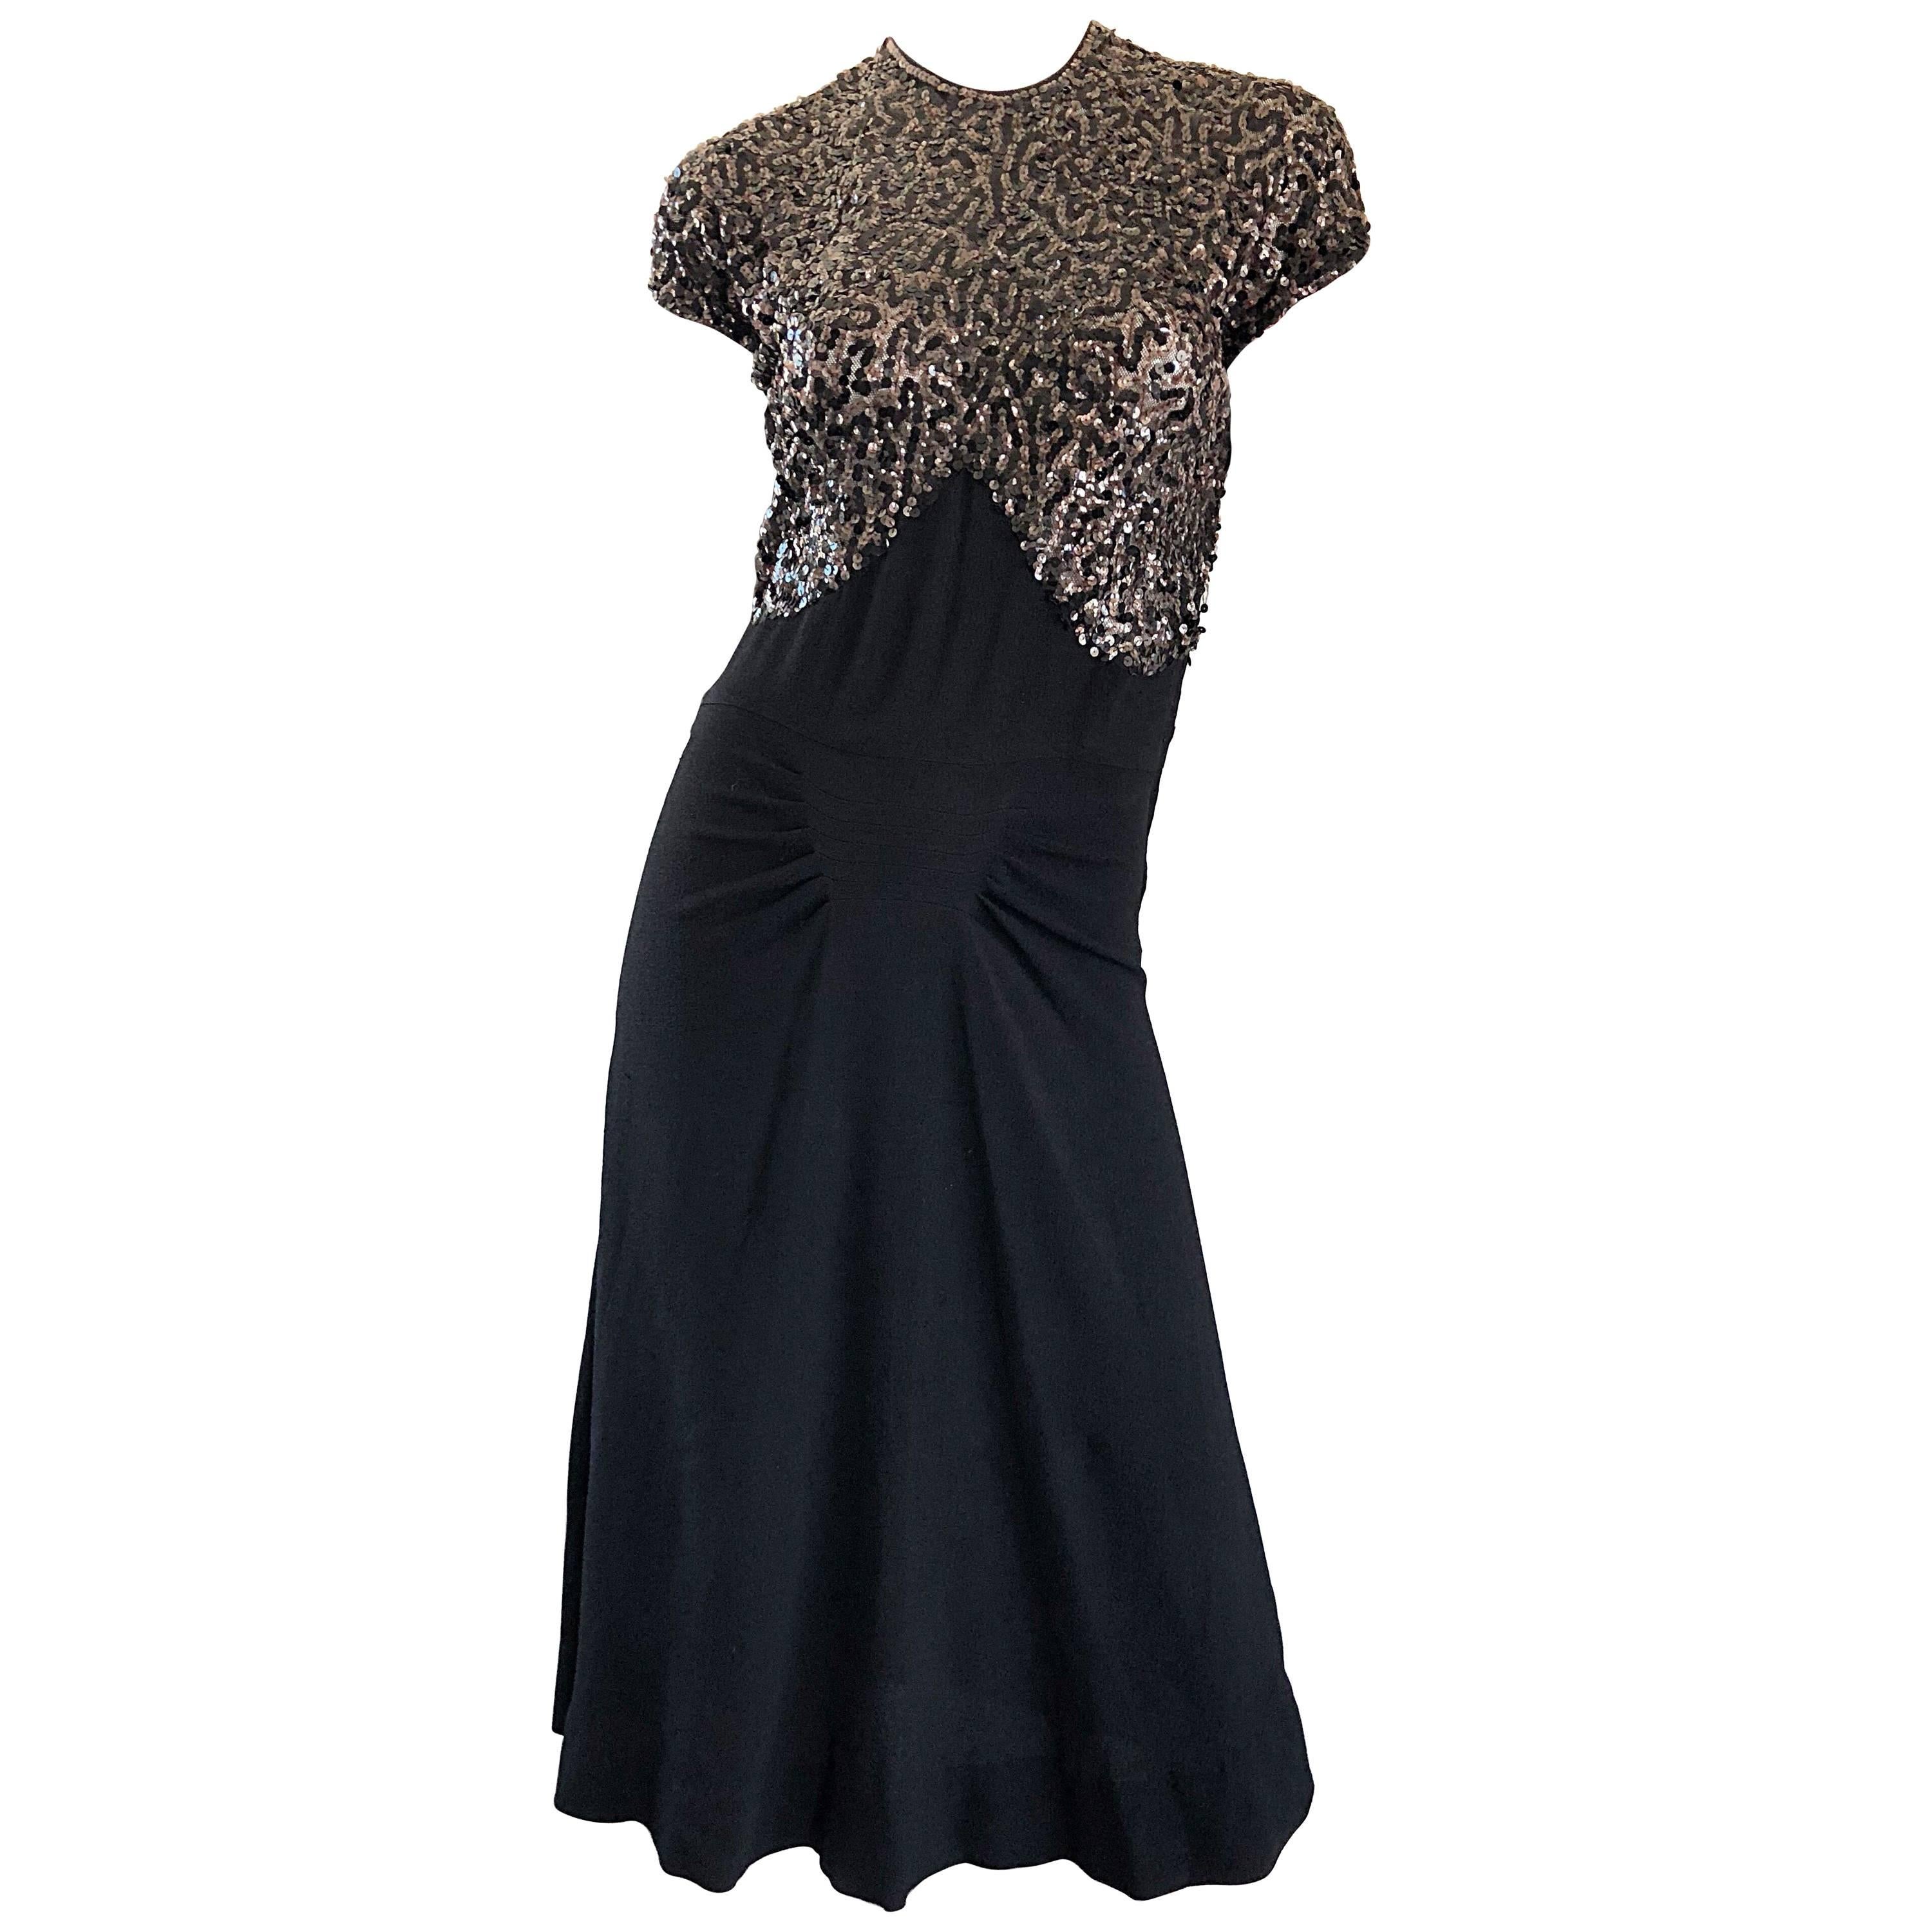 1940s cocktail dress,